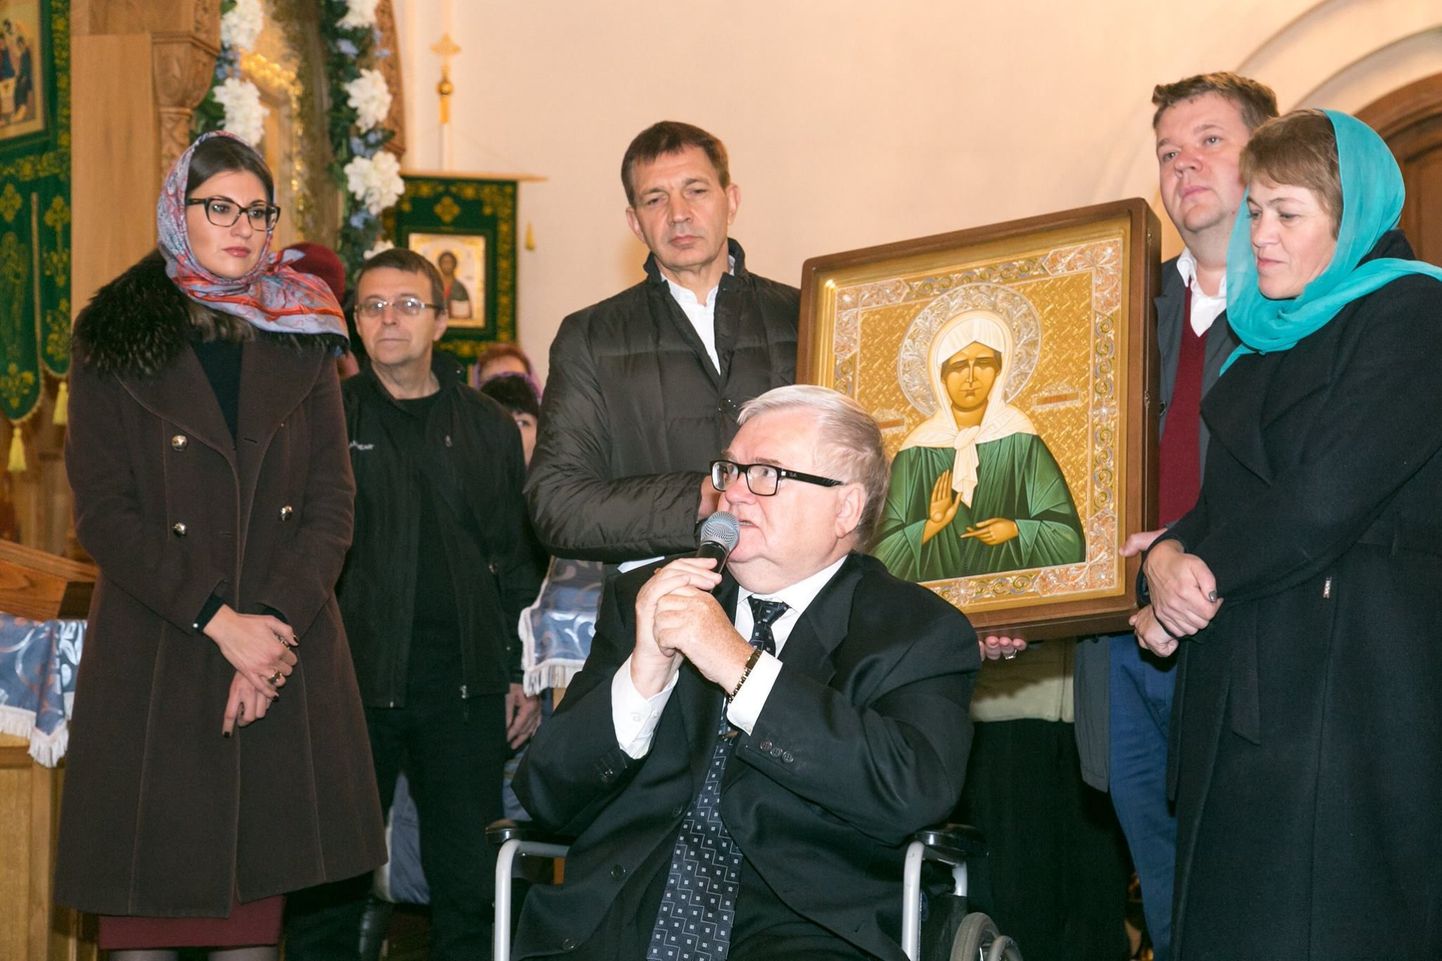 Эдгар Сависаар и Урмас Сыырумаа подарили Ласнамяэской церкви икону.